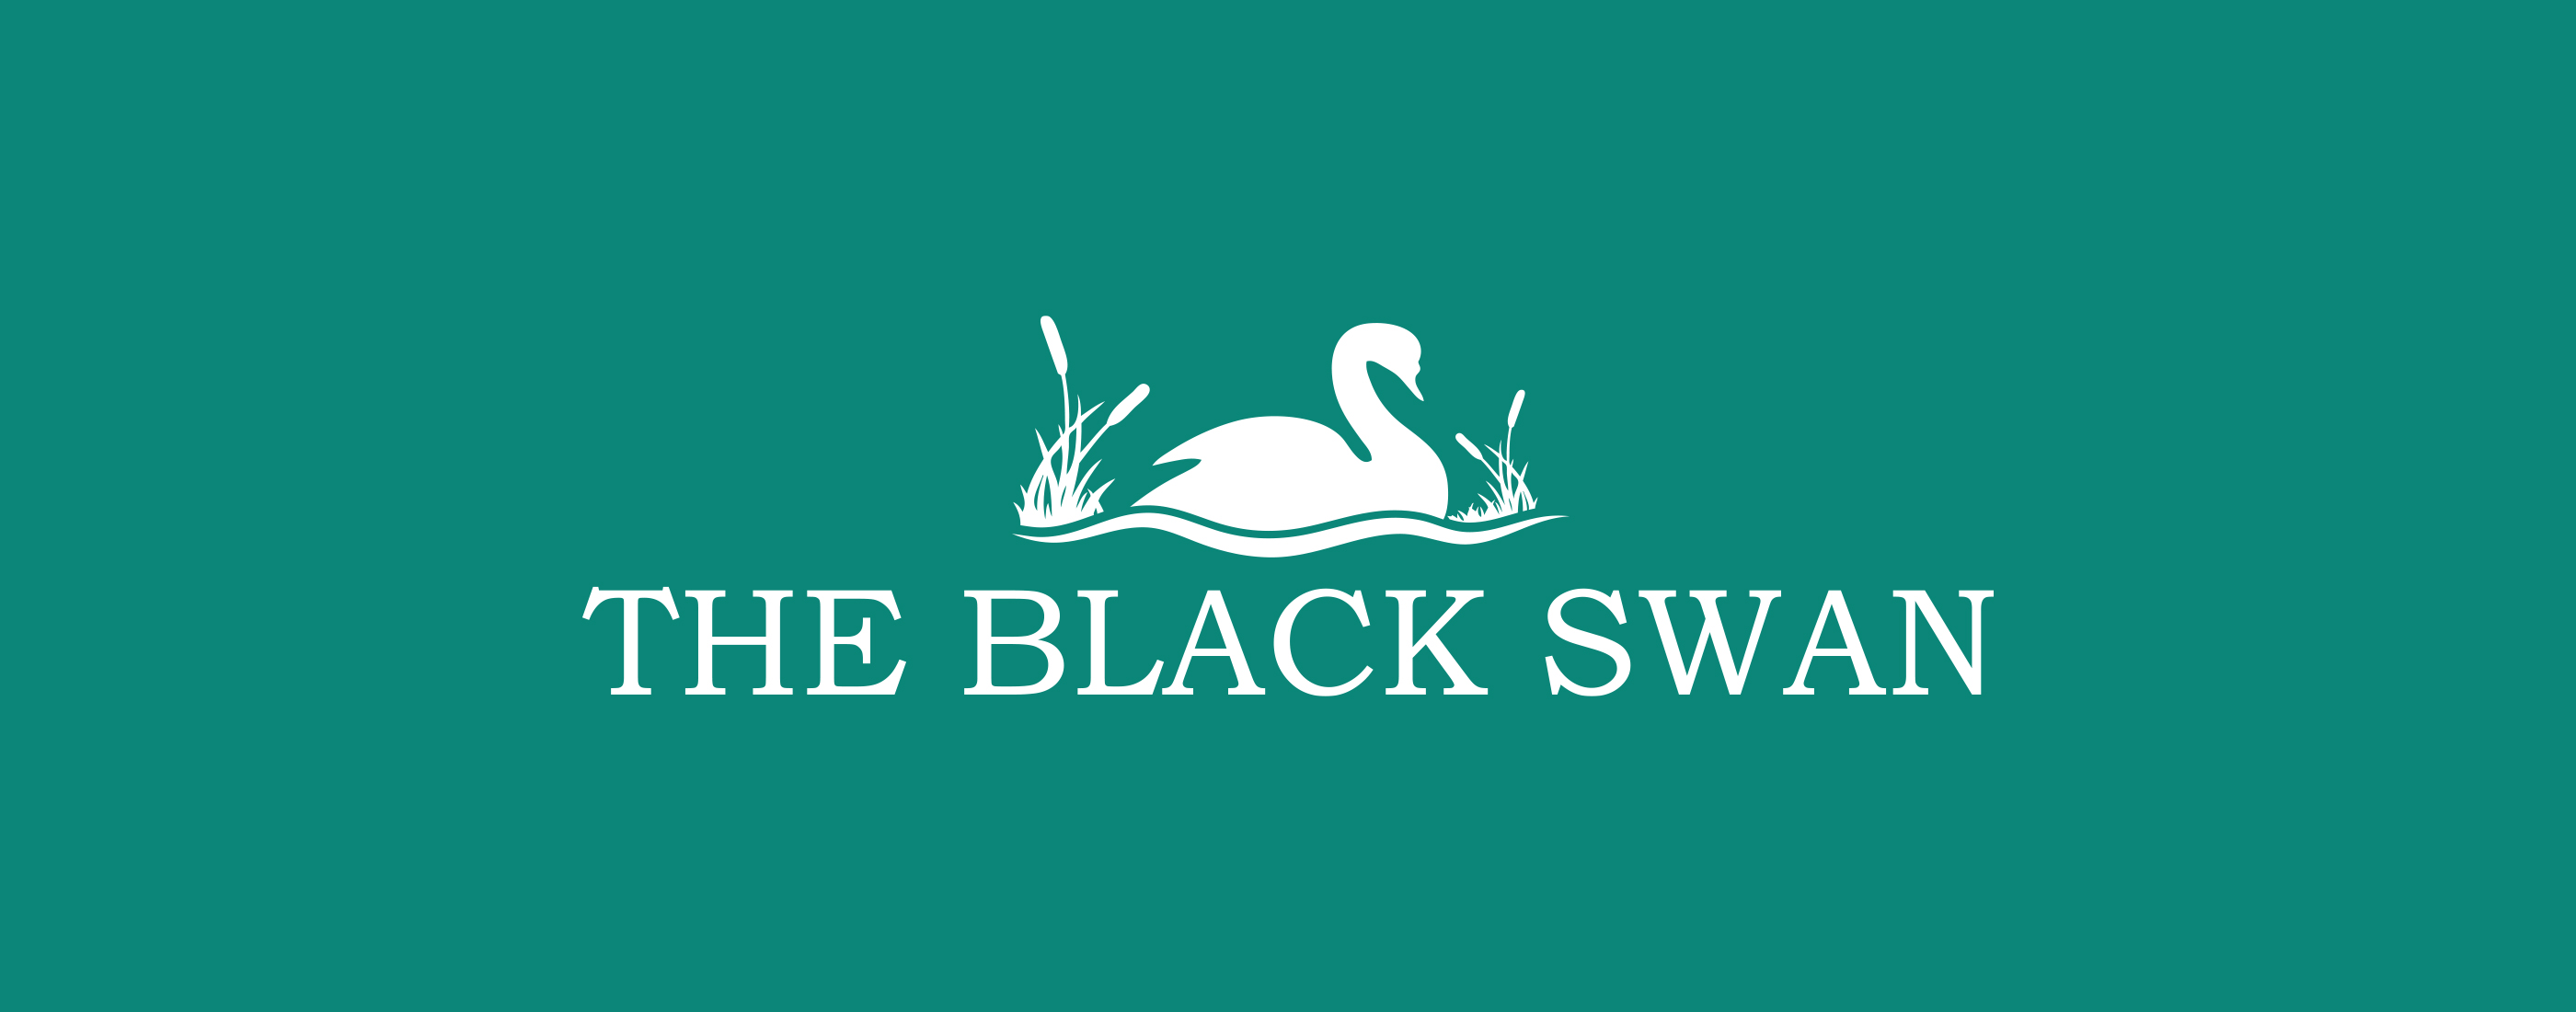 The Black Swan, brand apnd print management through creative design